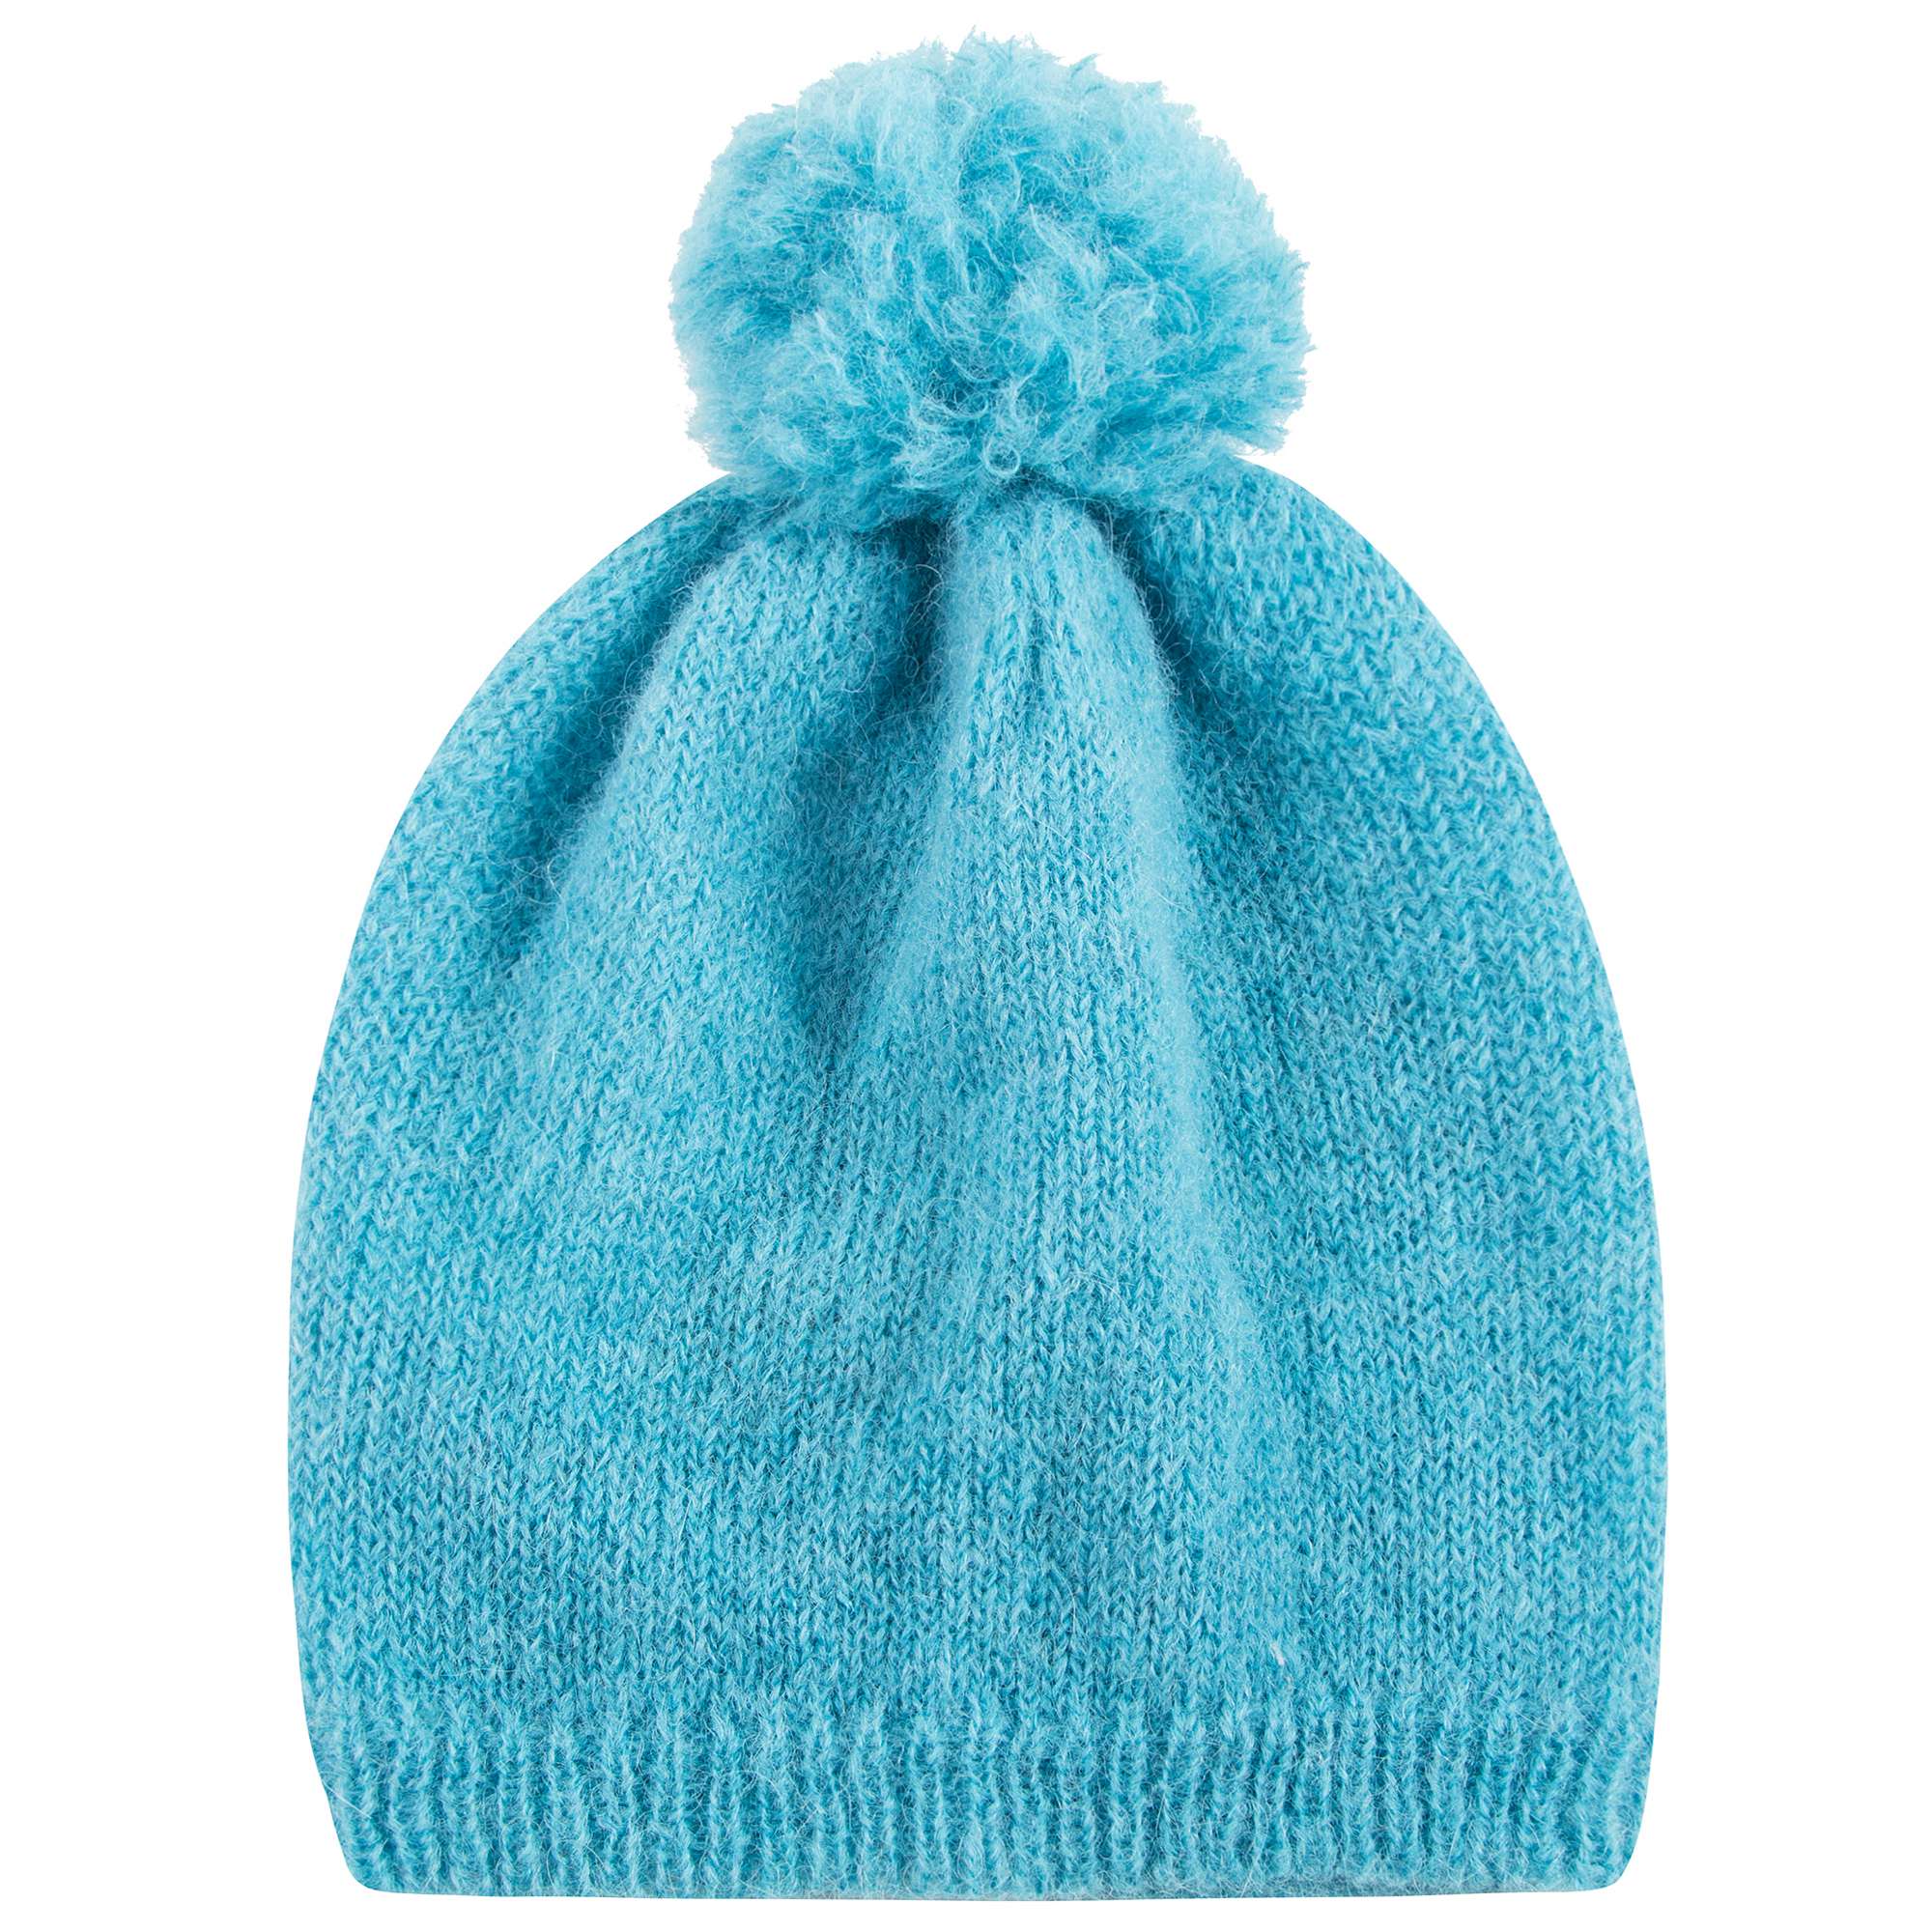 Girls Blue Alpaca Knitted Hat